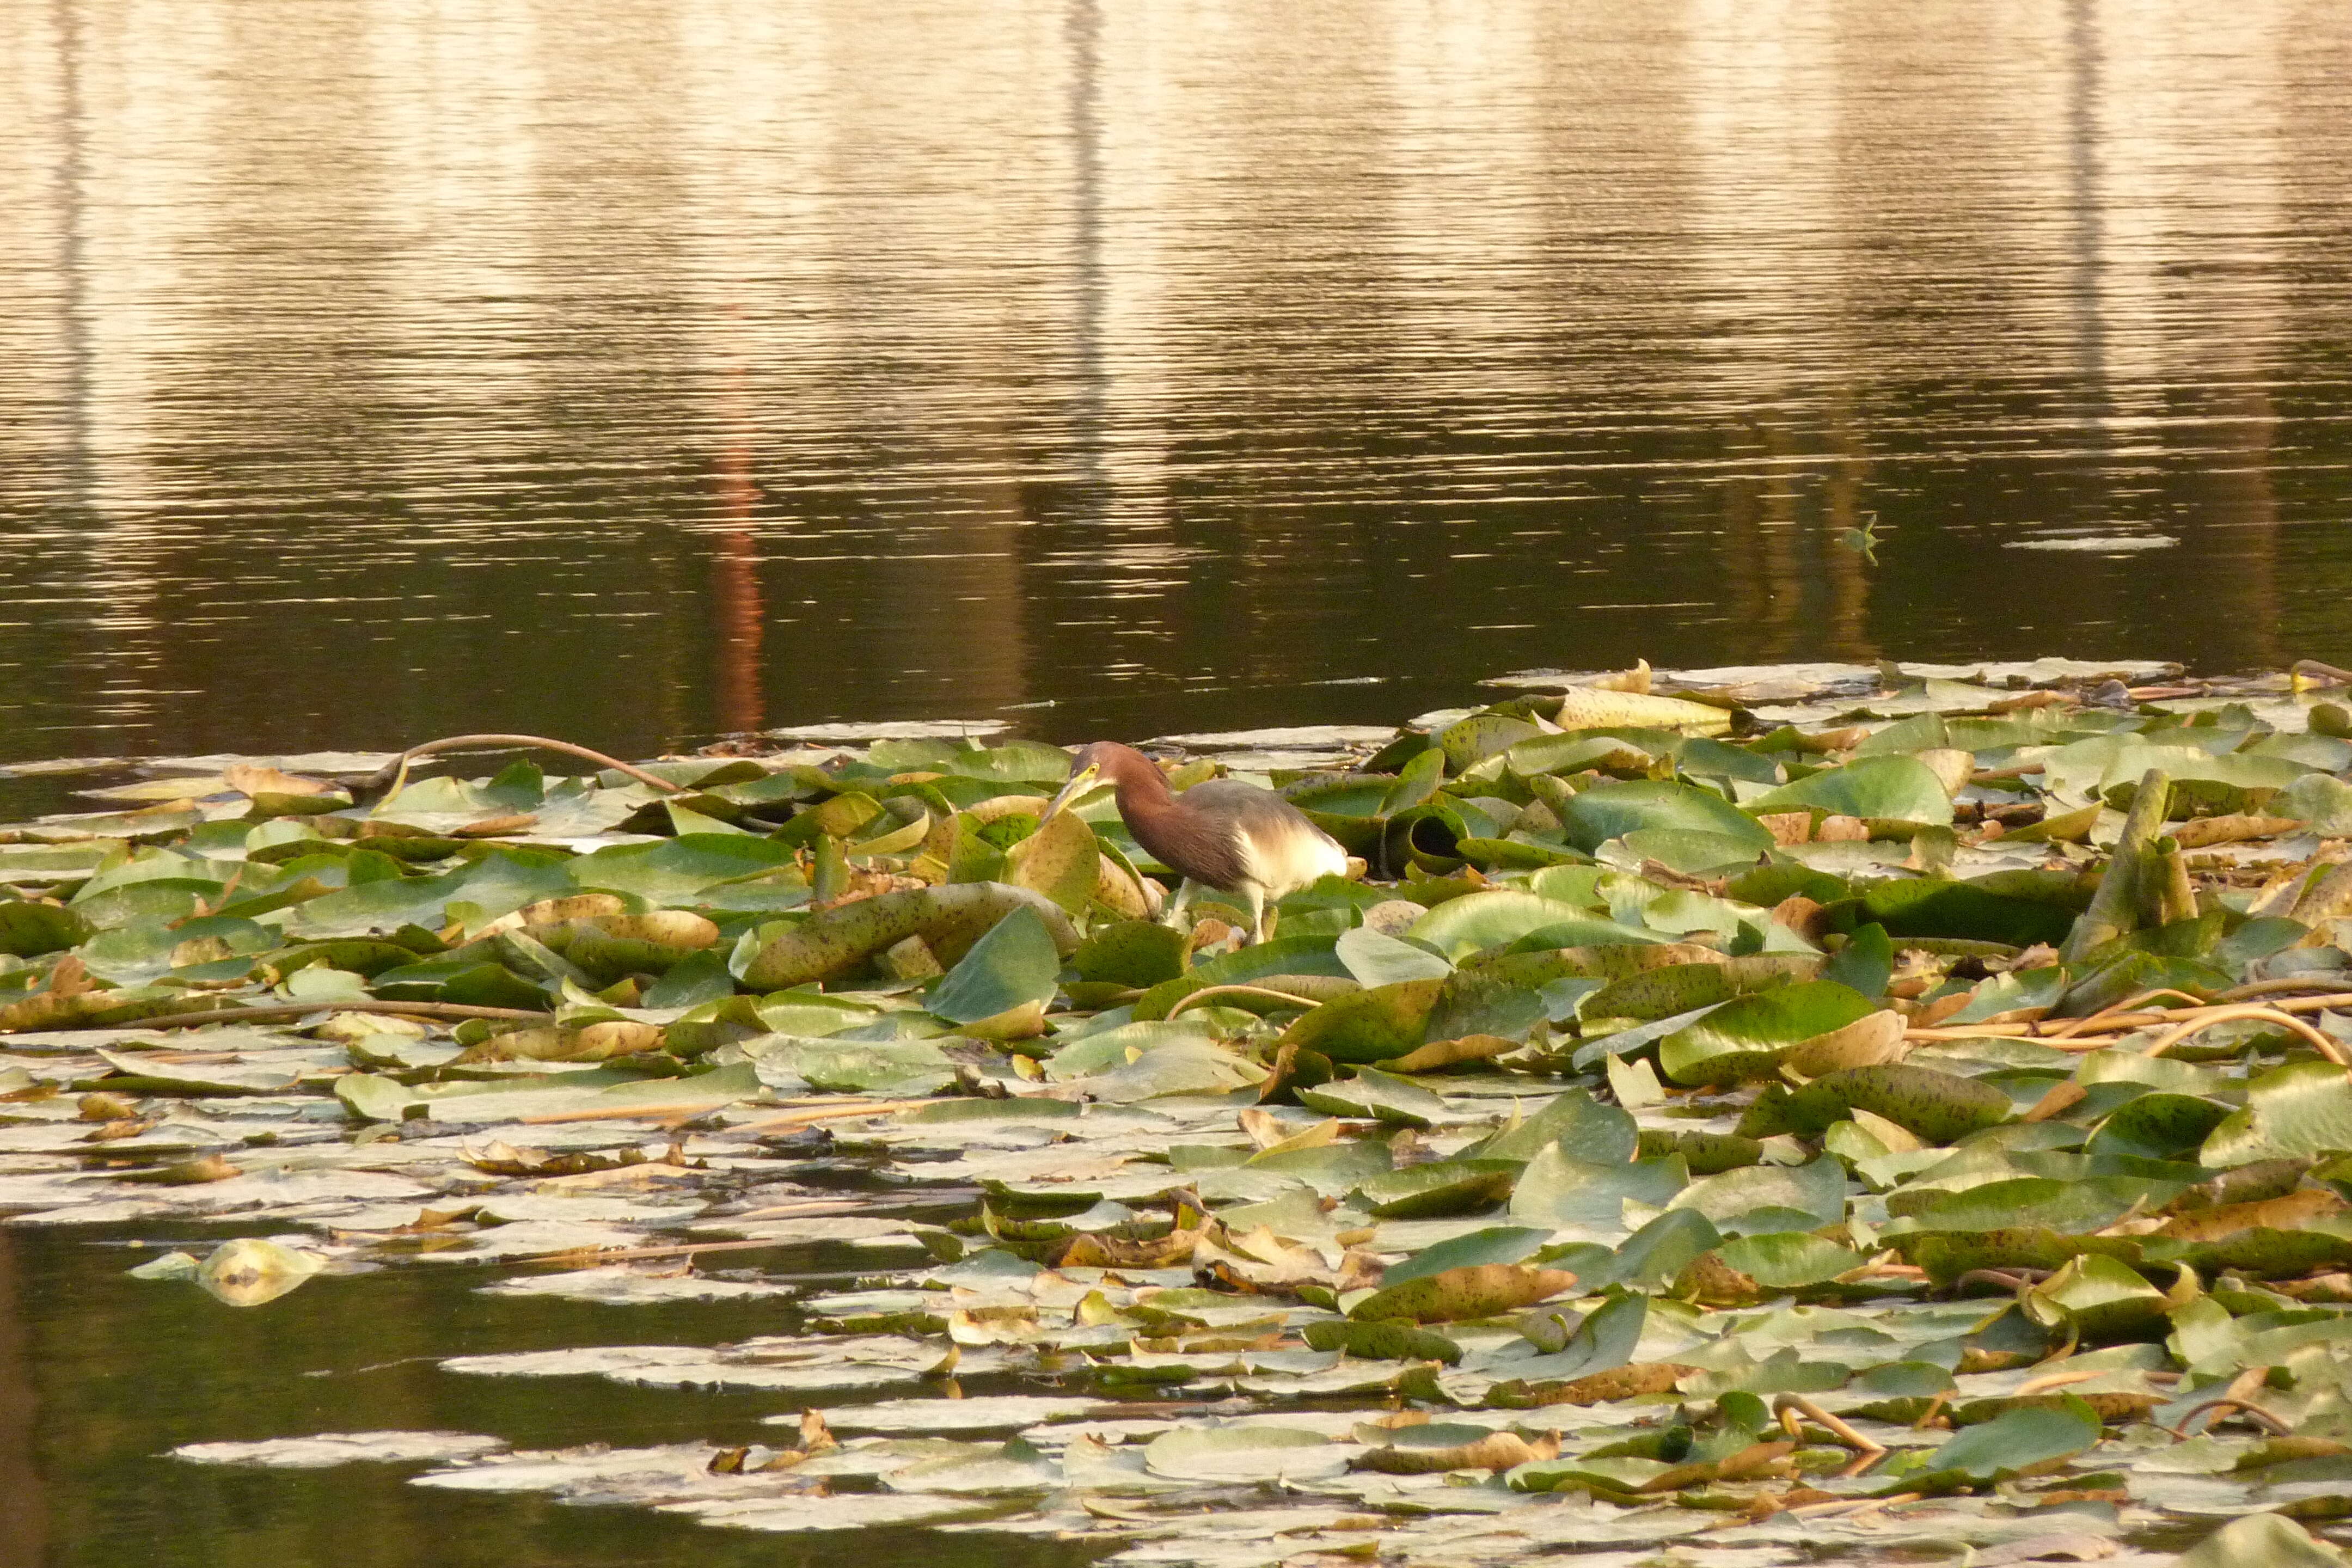 Image of Chinese Pond Heron